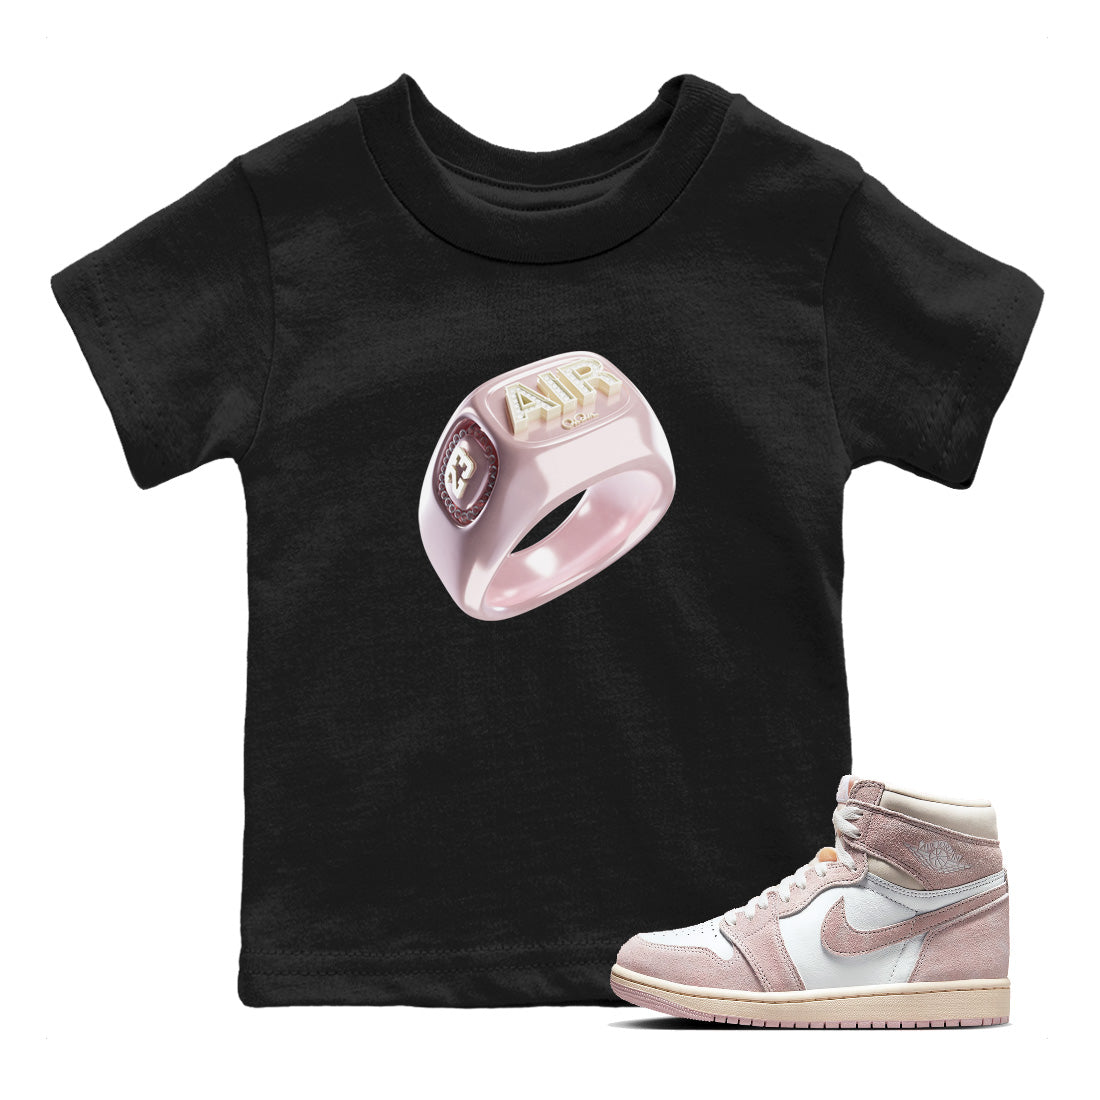 AJ1 Retro High OG Washed Pink Sneaker Tees Drip Gear Zone Diamond Ring Sneaker Tees AJ1 Retro High OG Washed Pink Shirt Kids Shirts Black 1